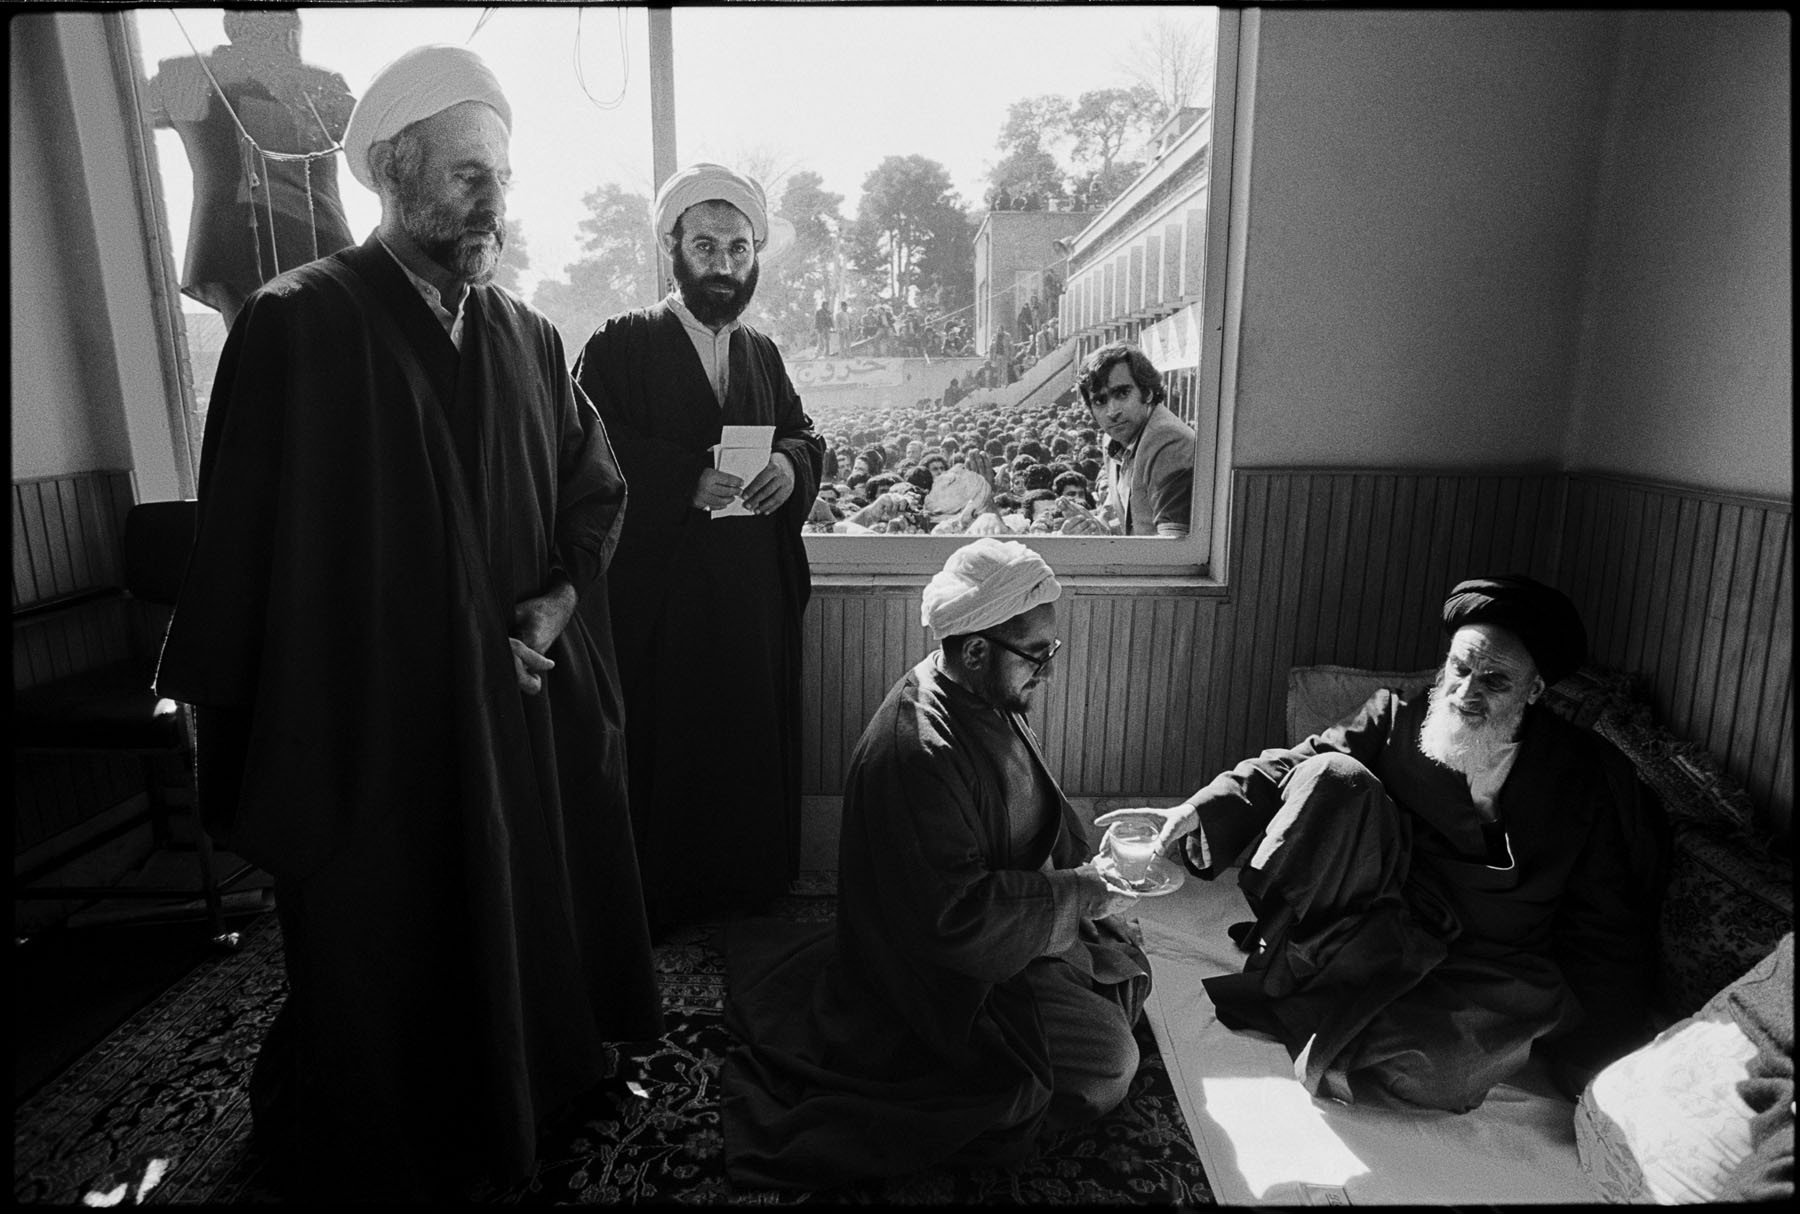 Ayatollah Khomeini, spiritual leader of the Iran Revolution : Classics, Old & New : David Burnett | Photographer